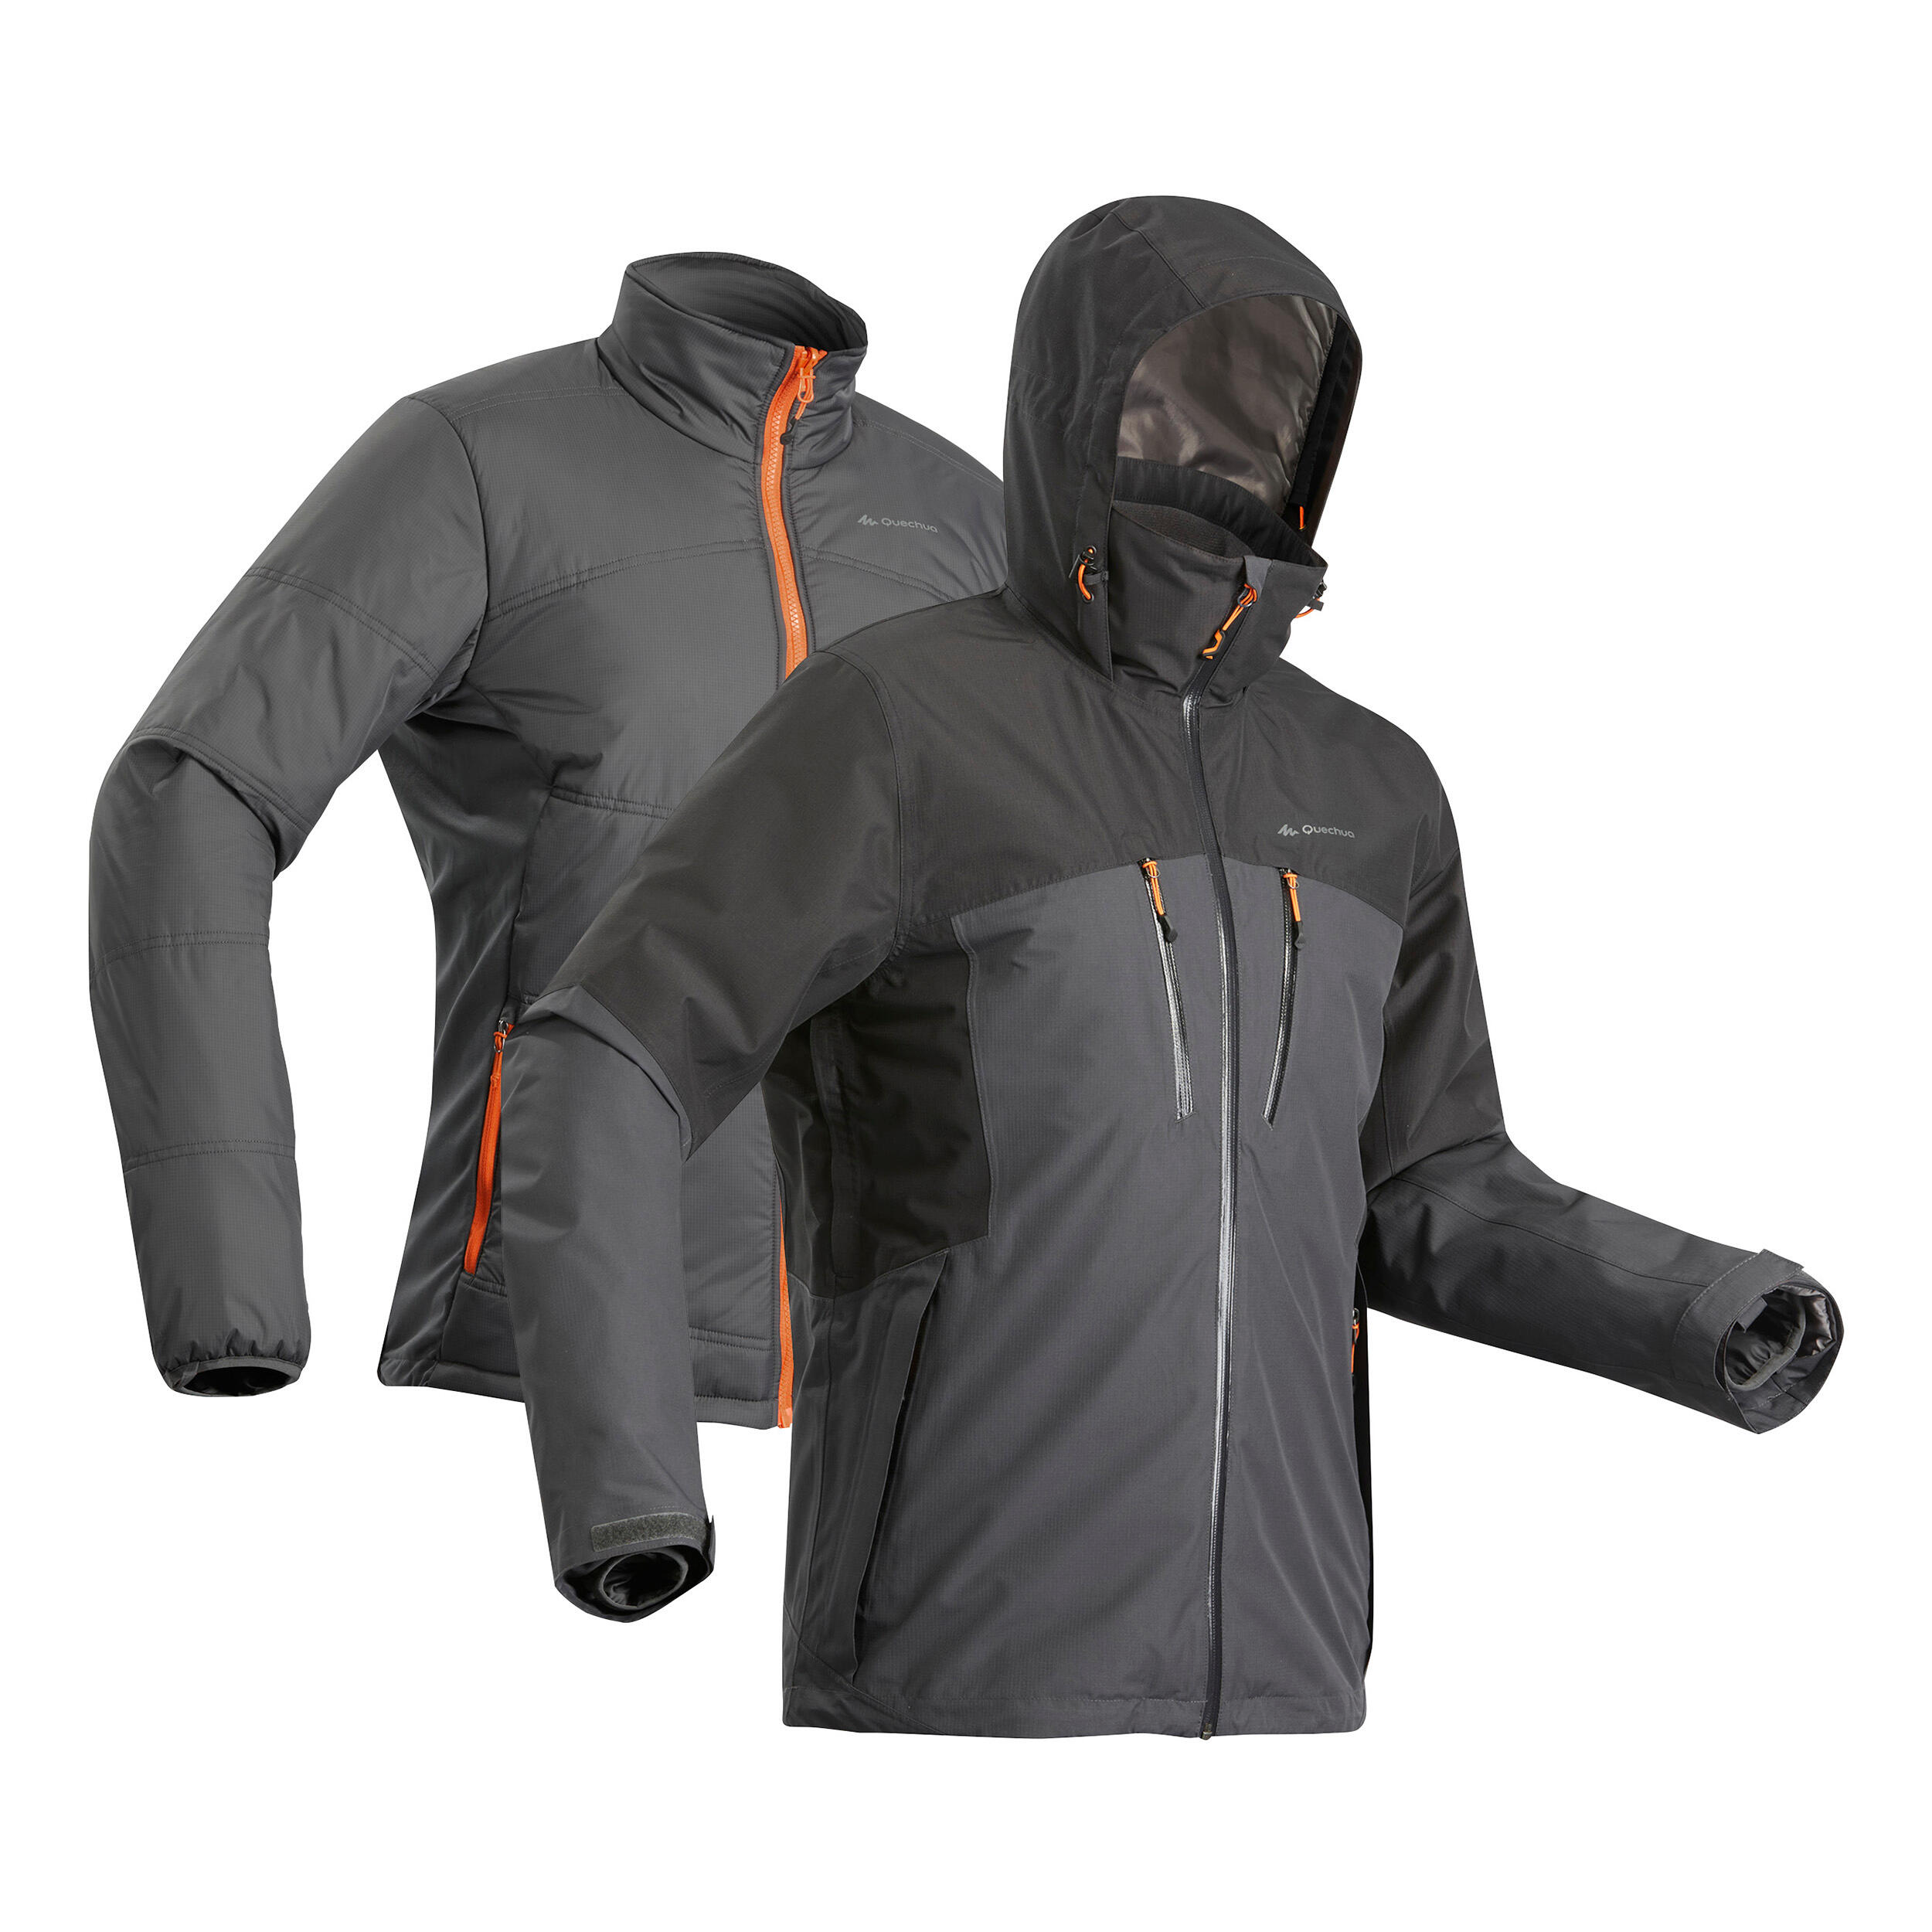 Men's Hiking 3-in-1 Jacket - Travel 500 Black - Carbon grey, [EN] smoked  black - Forclaz - Decathlon